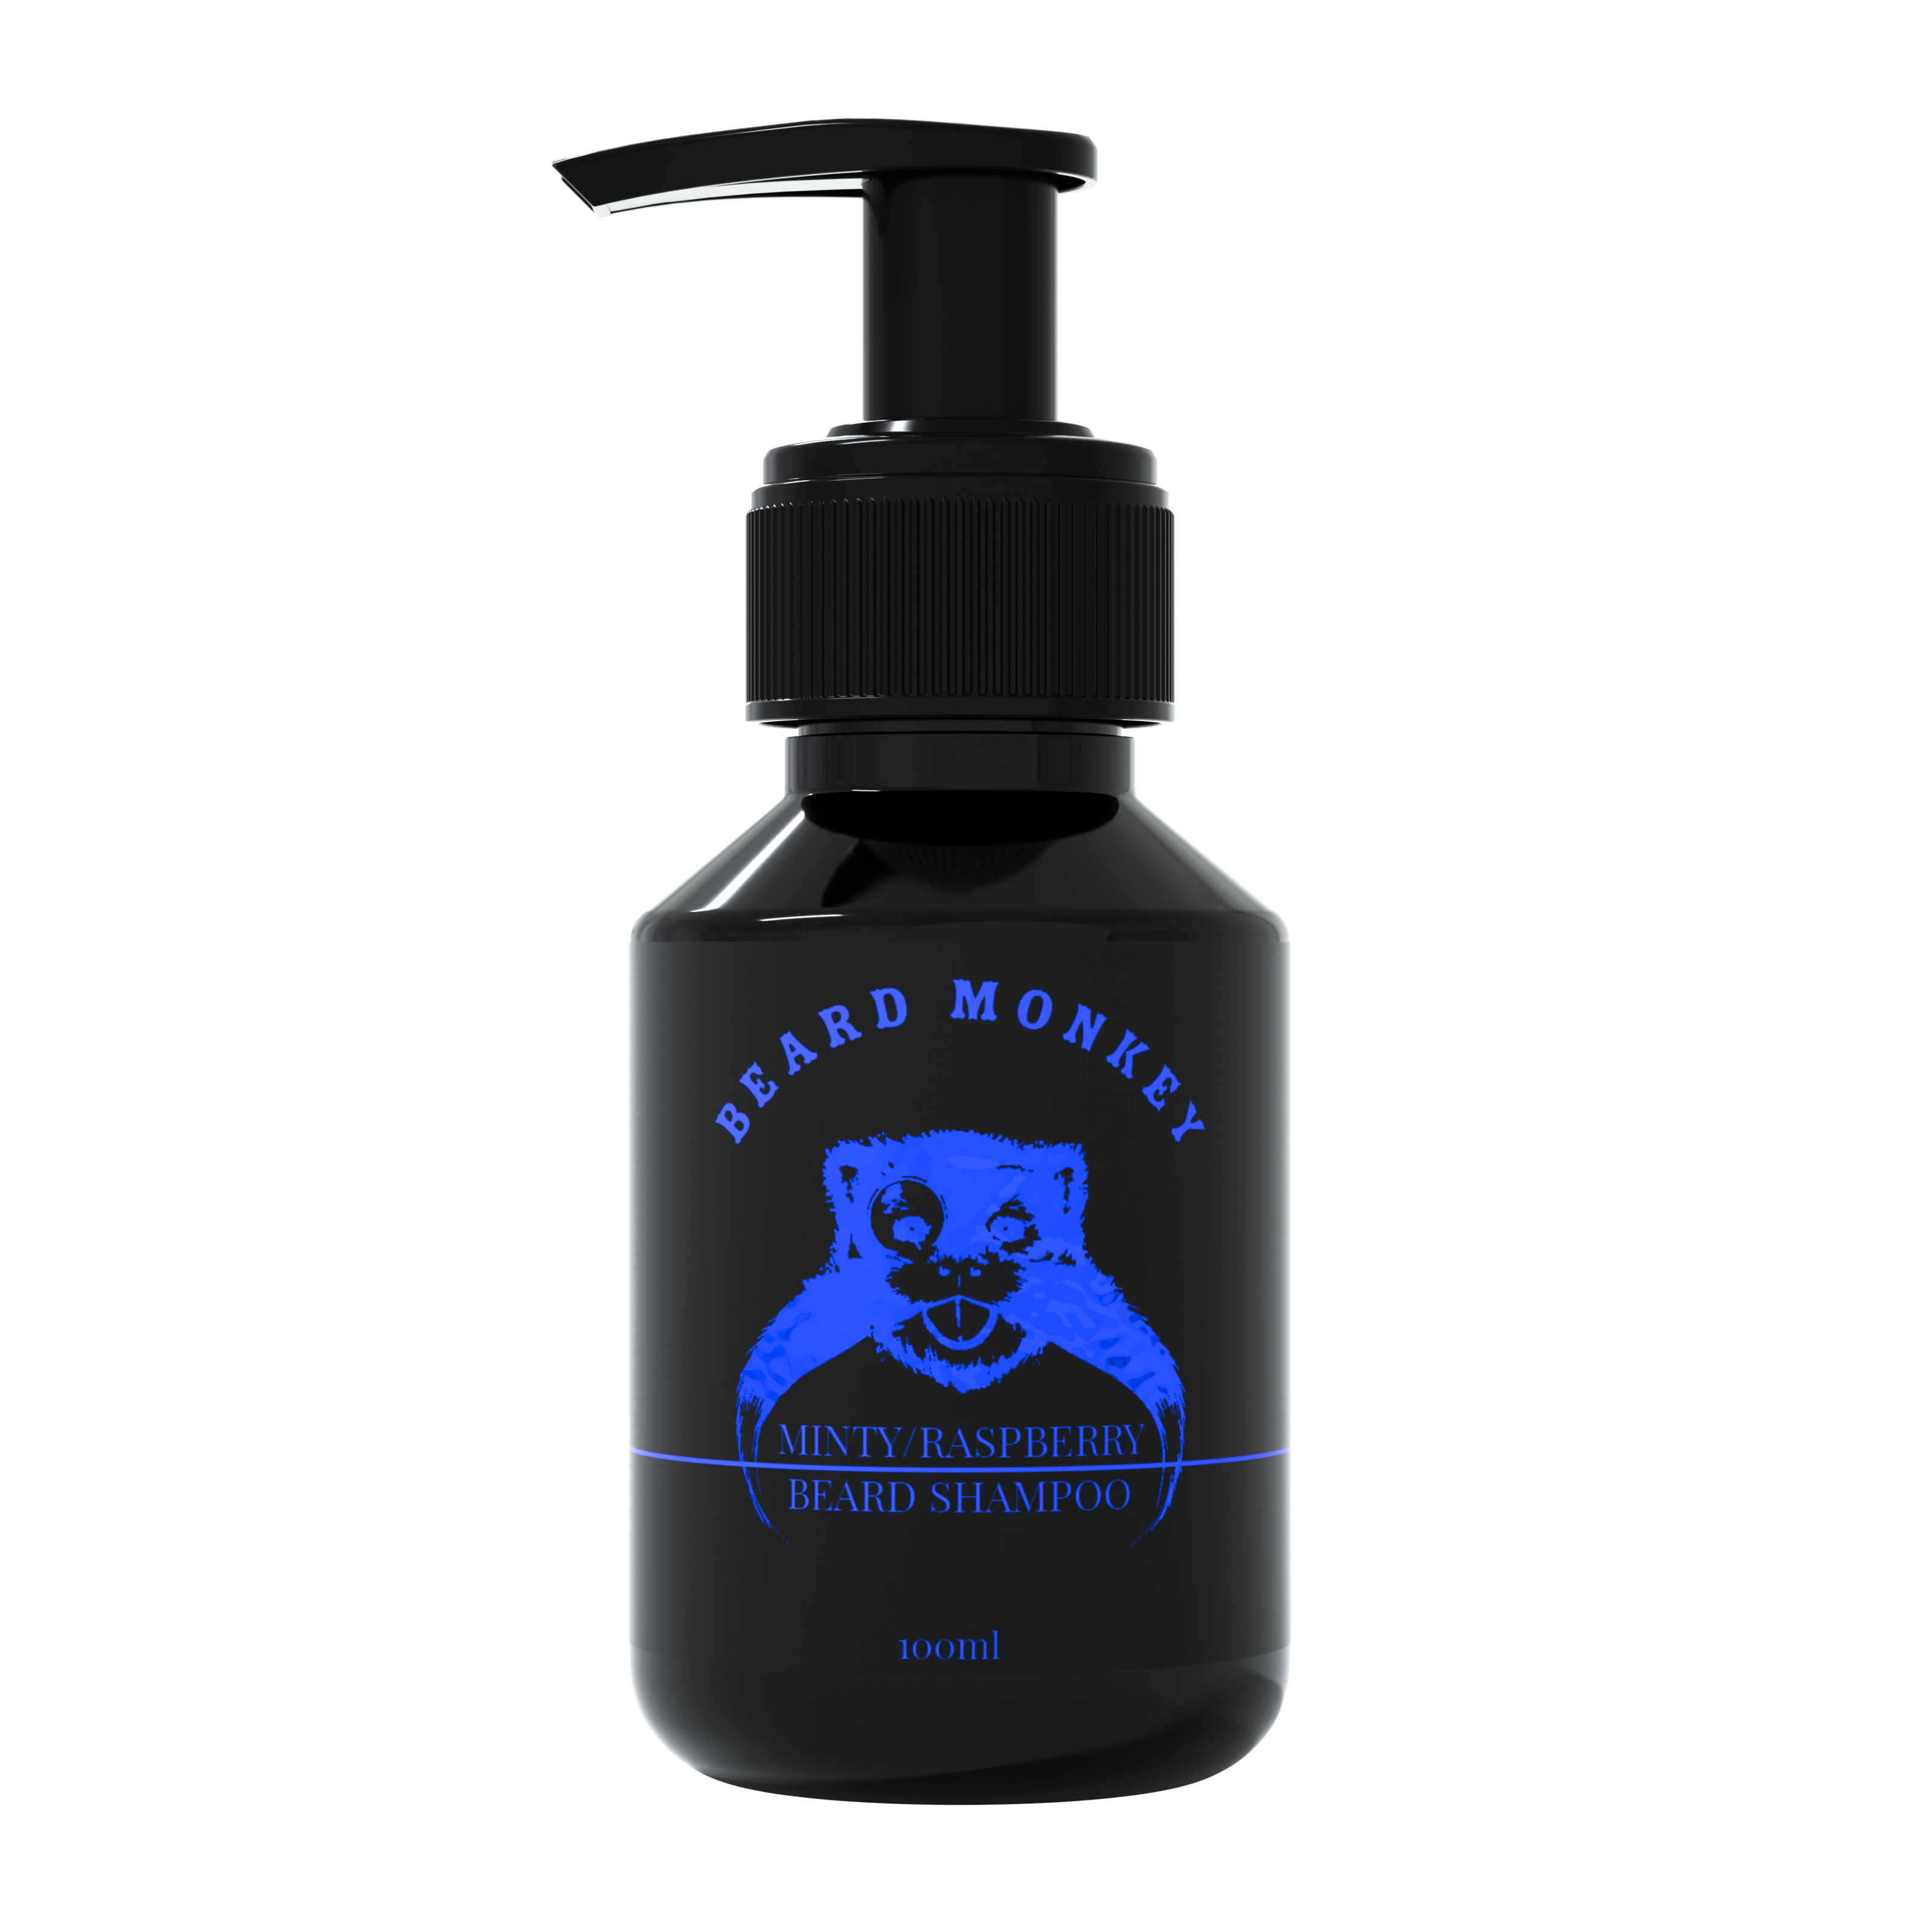 Läs mer om Beard Monkey Minty & Raspberry Beard shampoo 100 ml